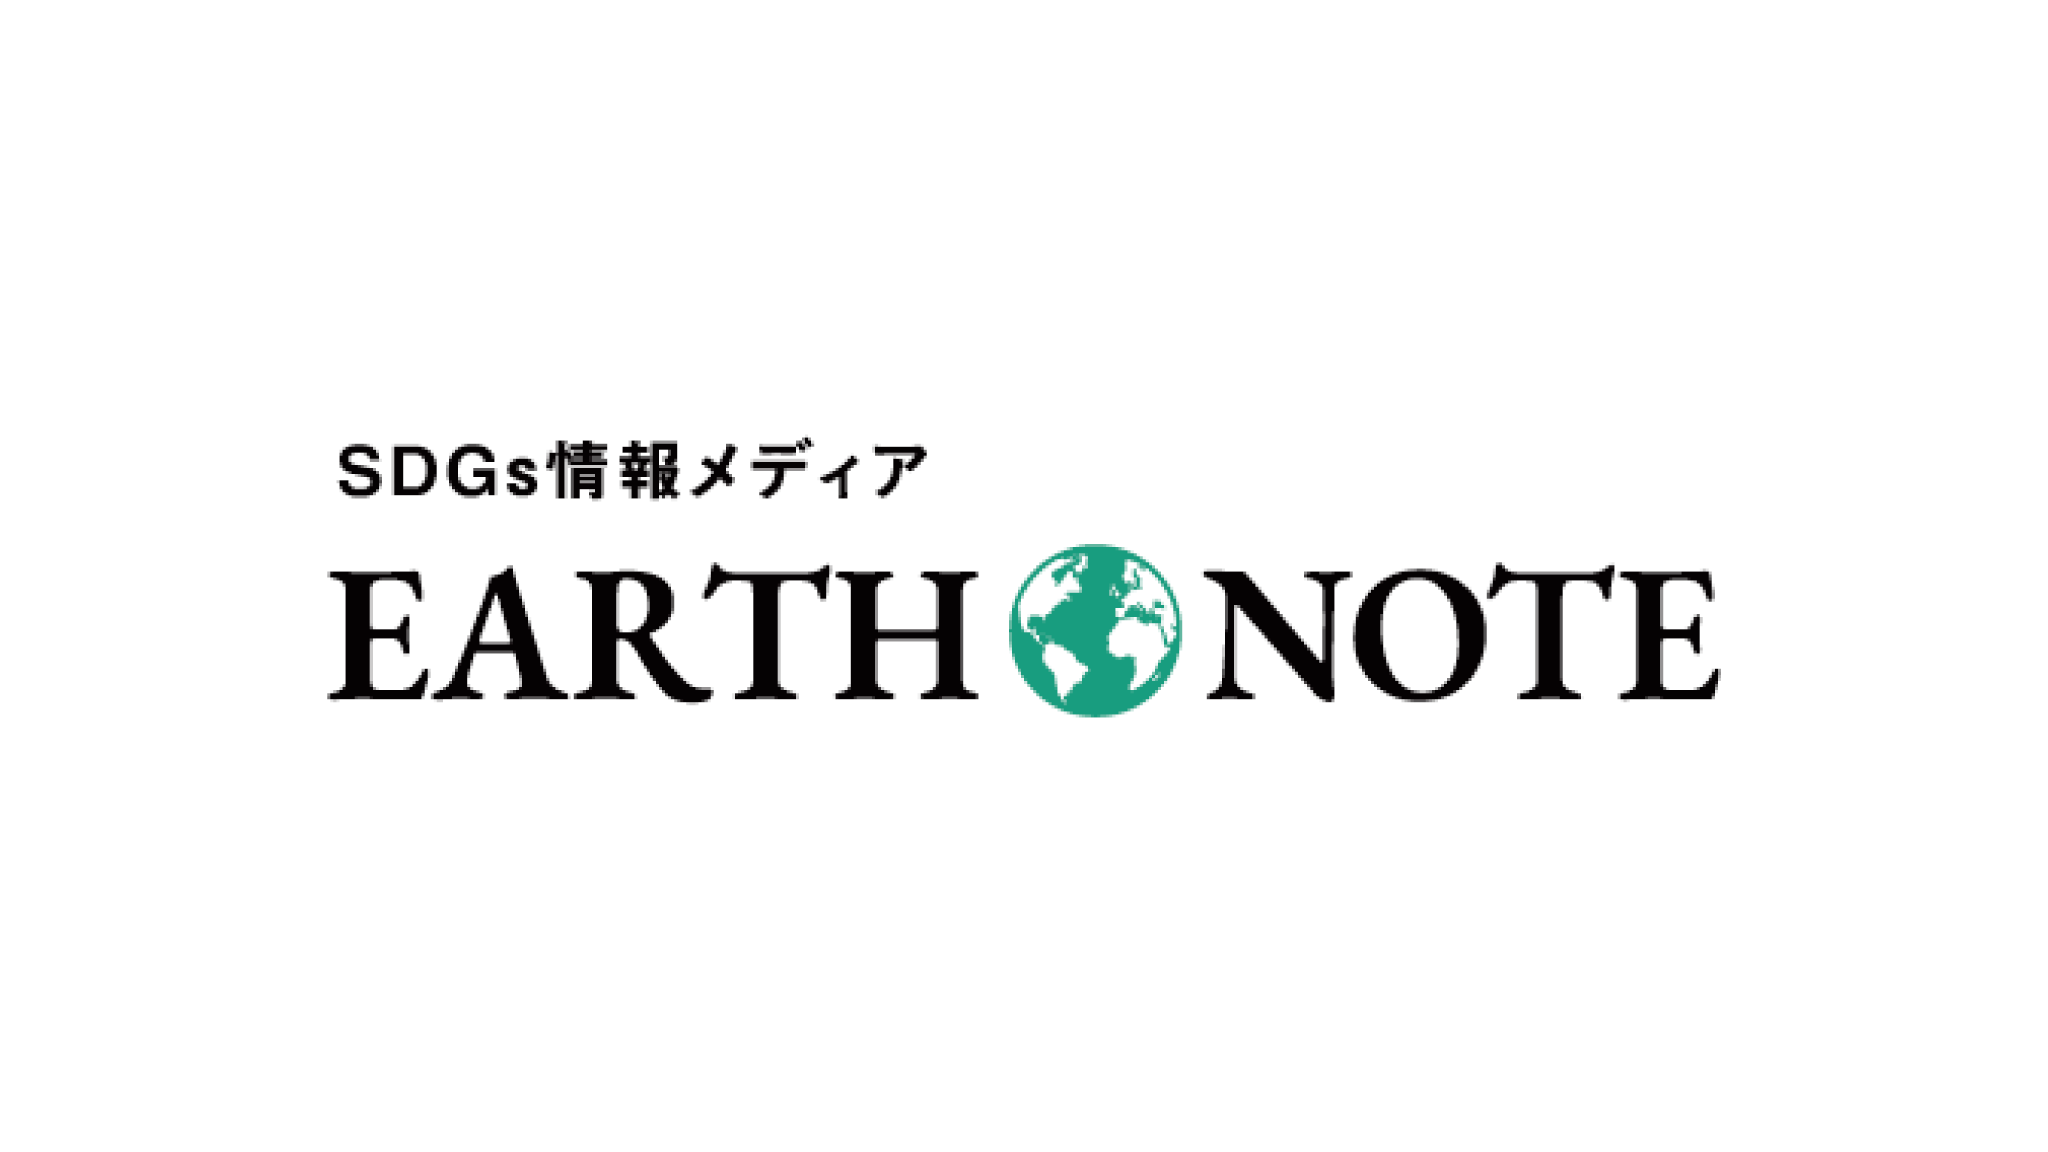 SDGs情報メディア「EARTH NOTE」にインタビュー掲載